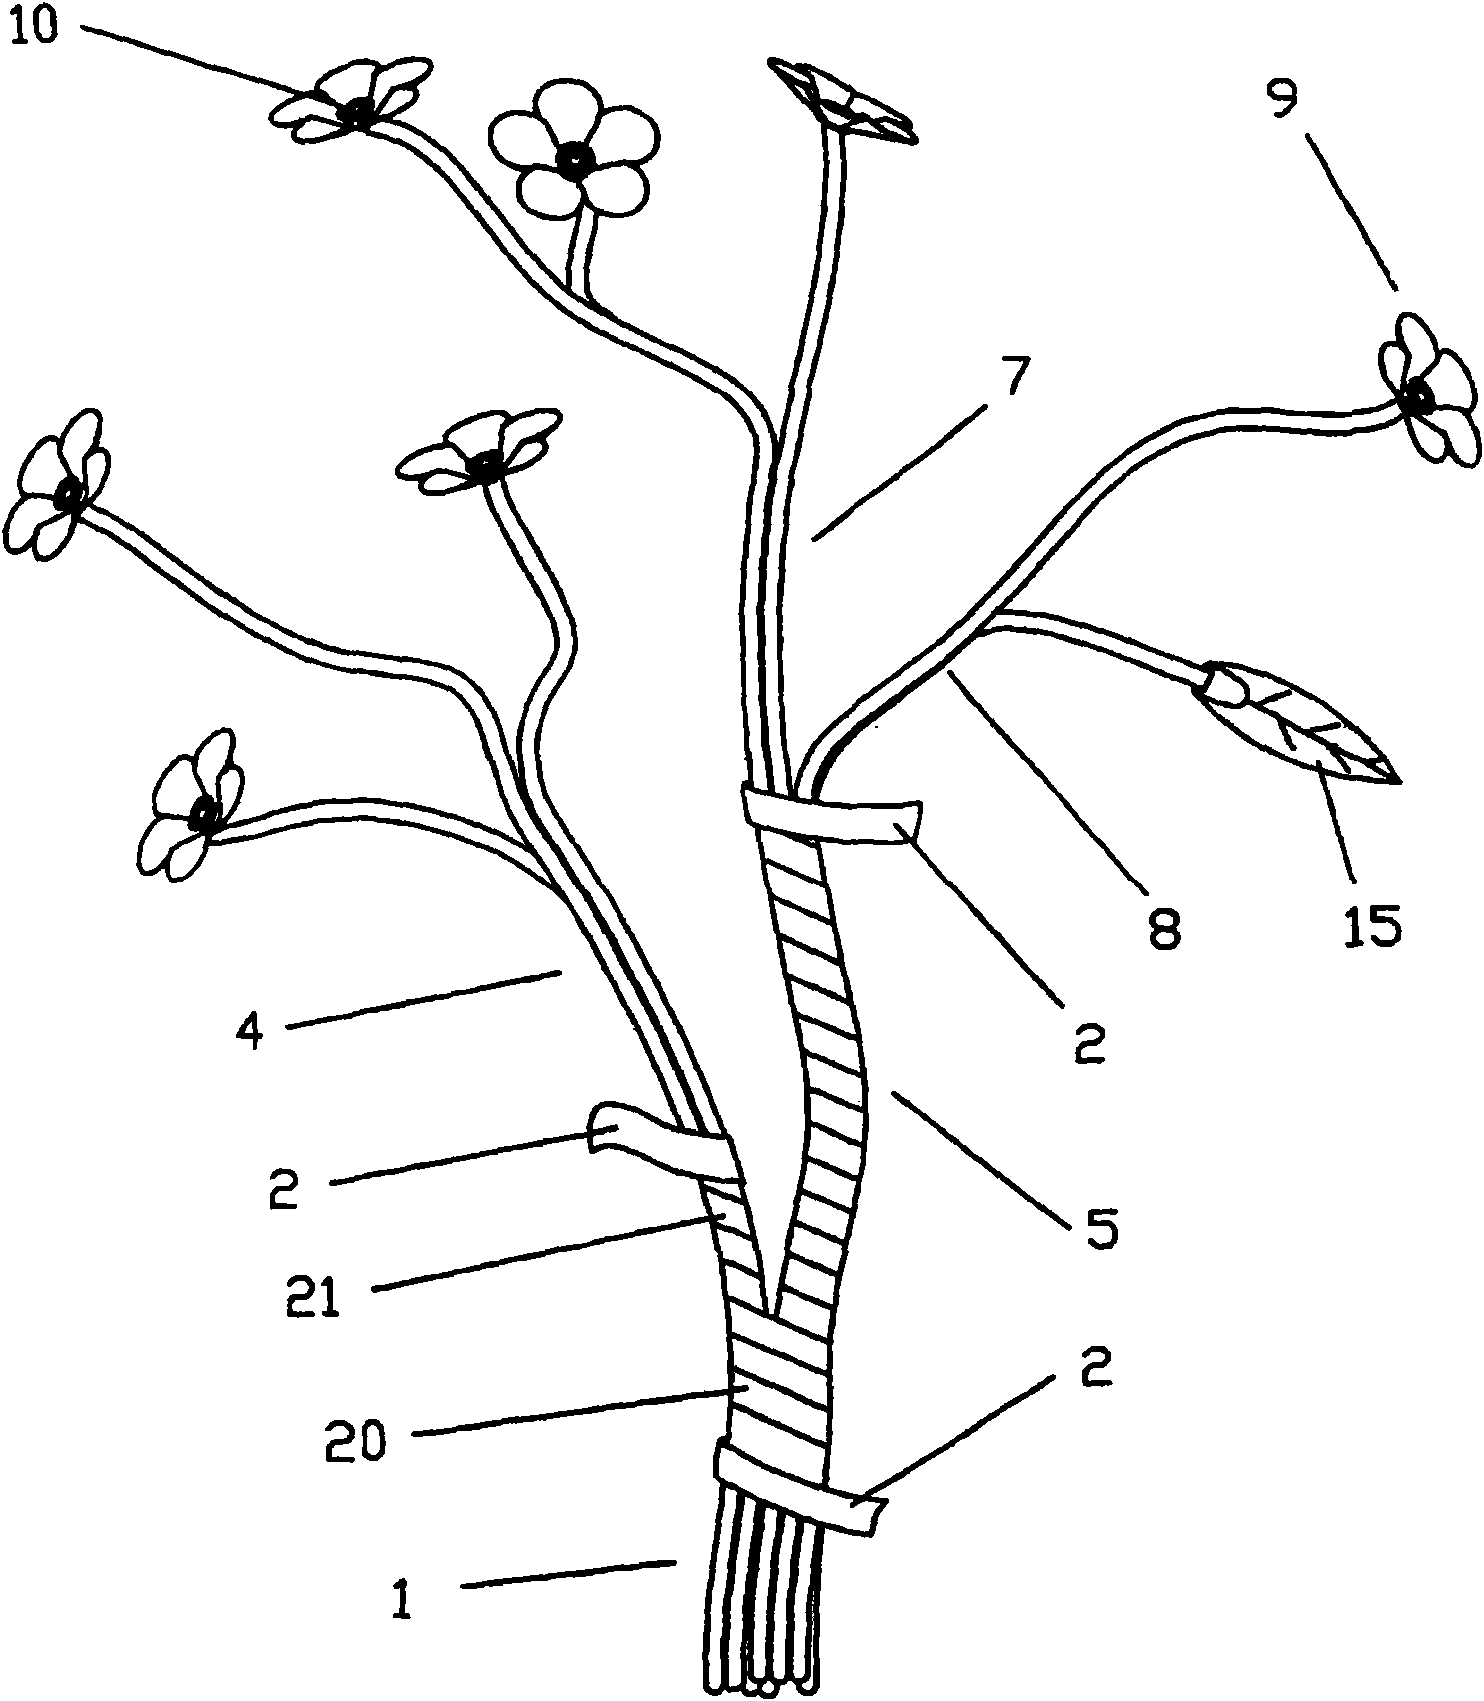 Simulated-tree festoon lighting structure